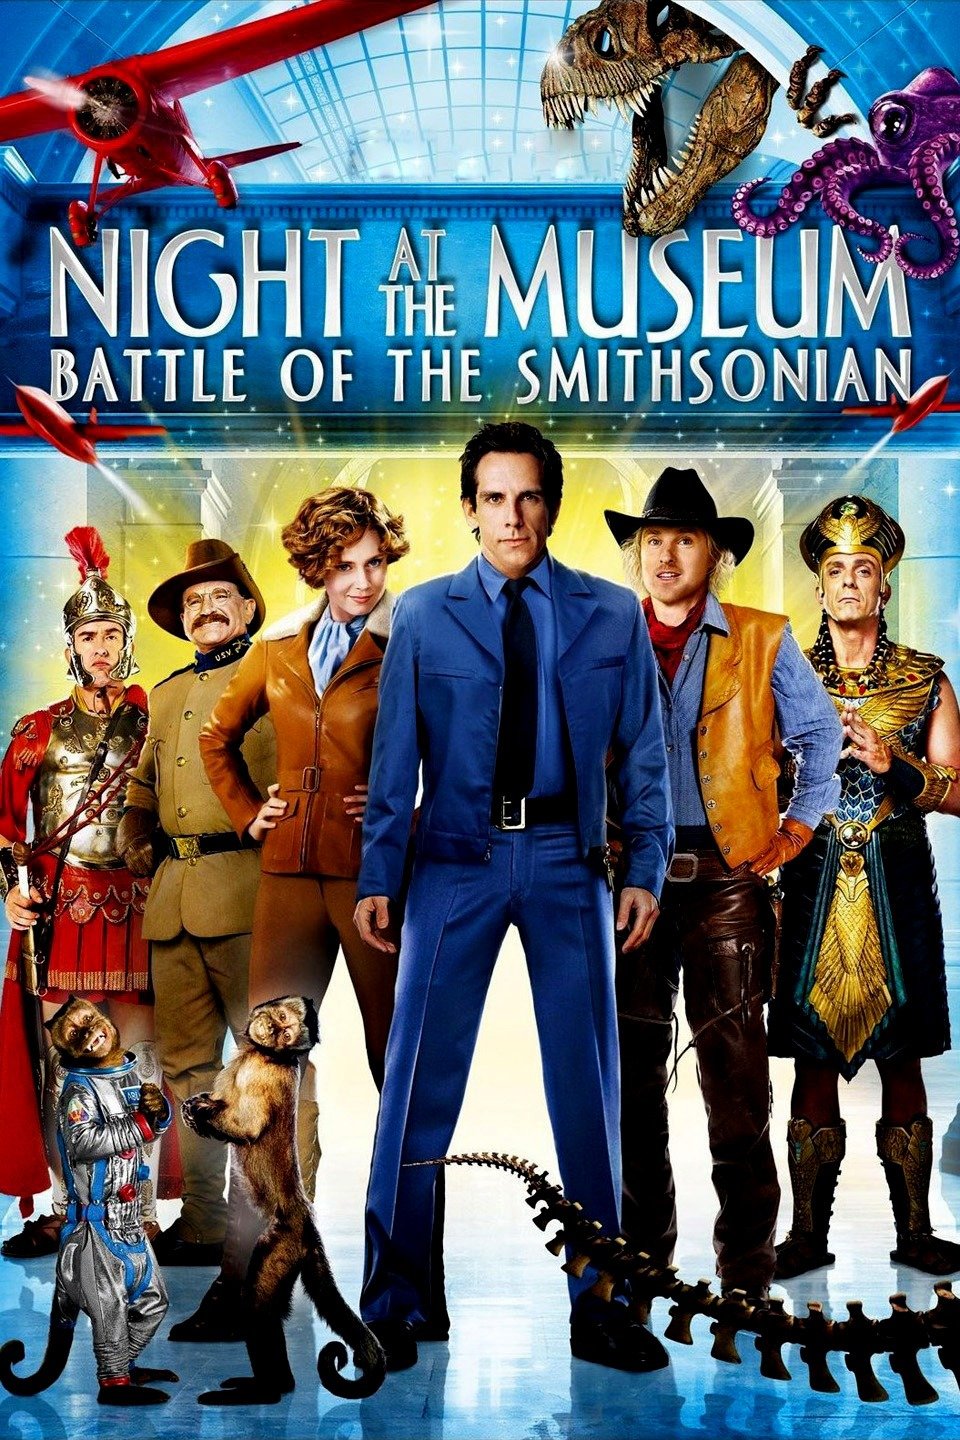 [MINI Super-HQ] Night at the Museum: Battle of the Smithsonian 2 (2009) มหึมาพิพิธภัณฑ์ ดับเบิ้ลมันส์ทะลุโลก ภาค 2 [1080p] [พากย์ไทย 5.1 + เสียงอังกฤษ 5.1] [บรรยายไทย + อังกฤษ] [เสียงไทย + ซับไทย] [ONE2UP]